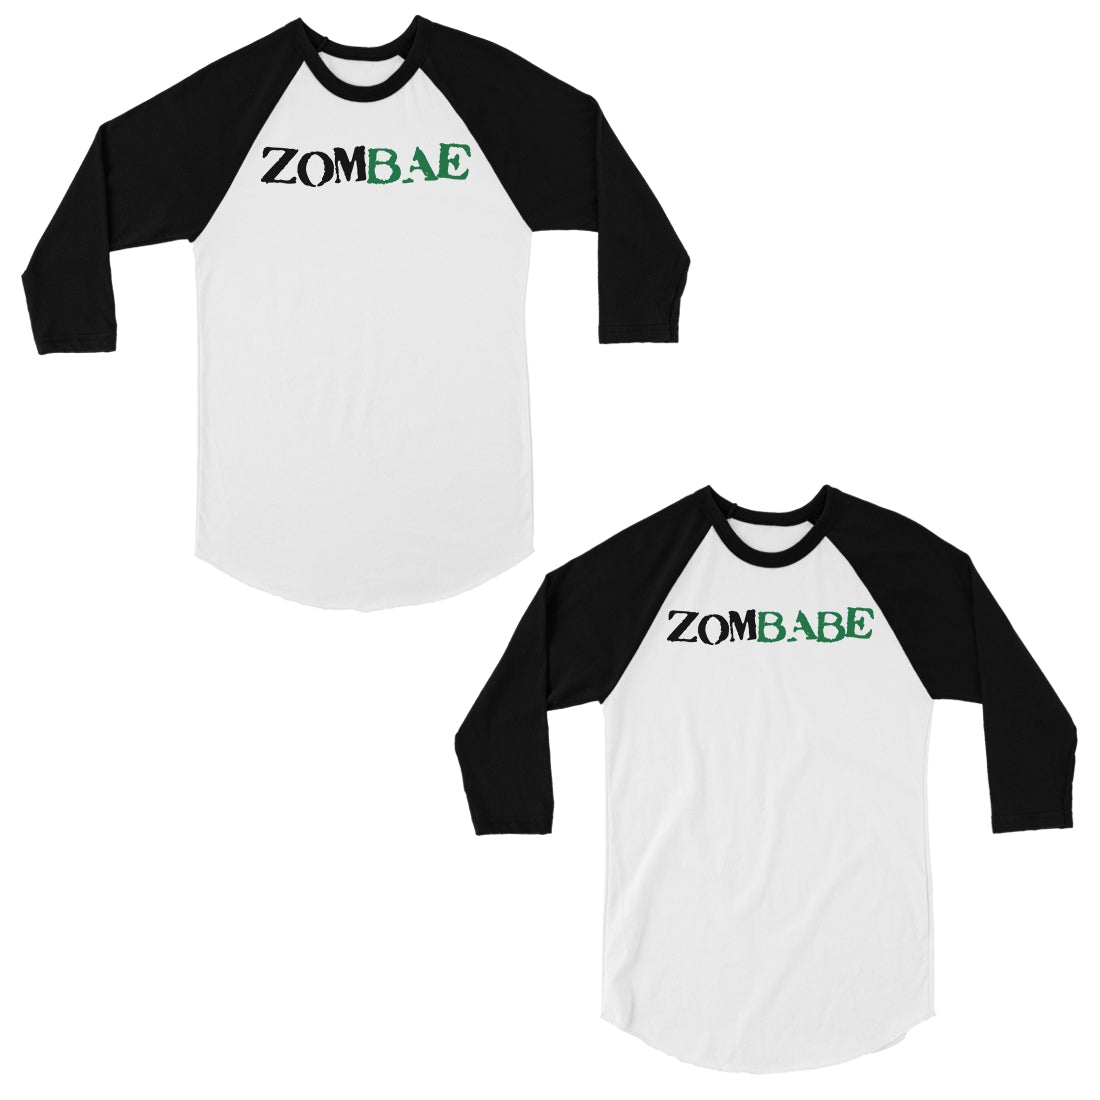 Zombae And Zombabe Matching Couples Baseball Shirts Black and White